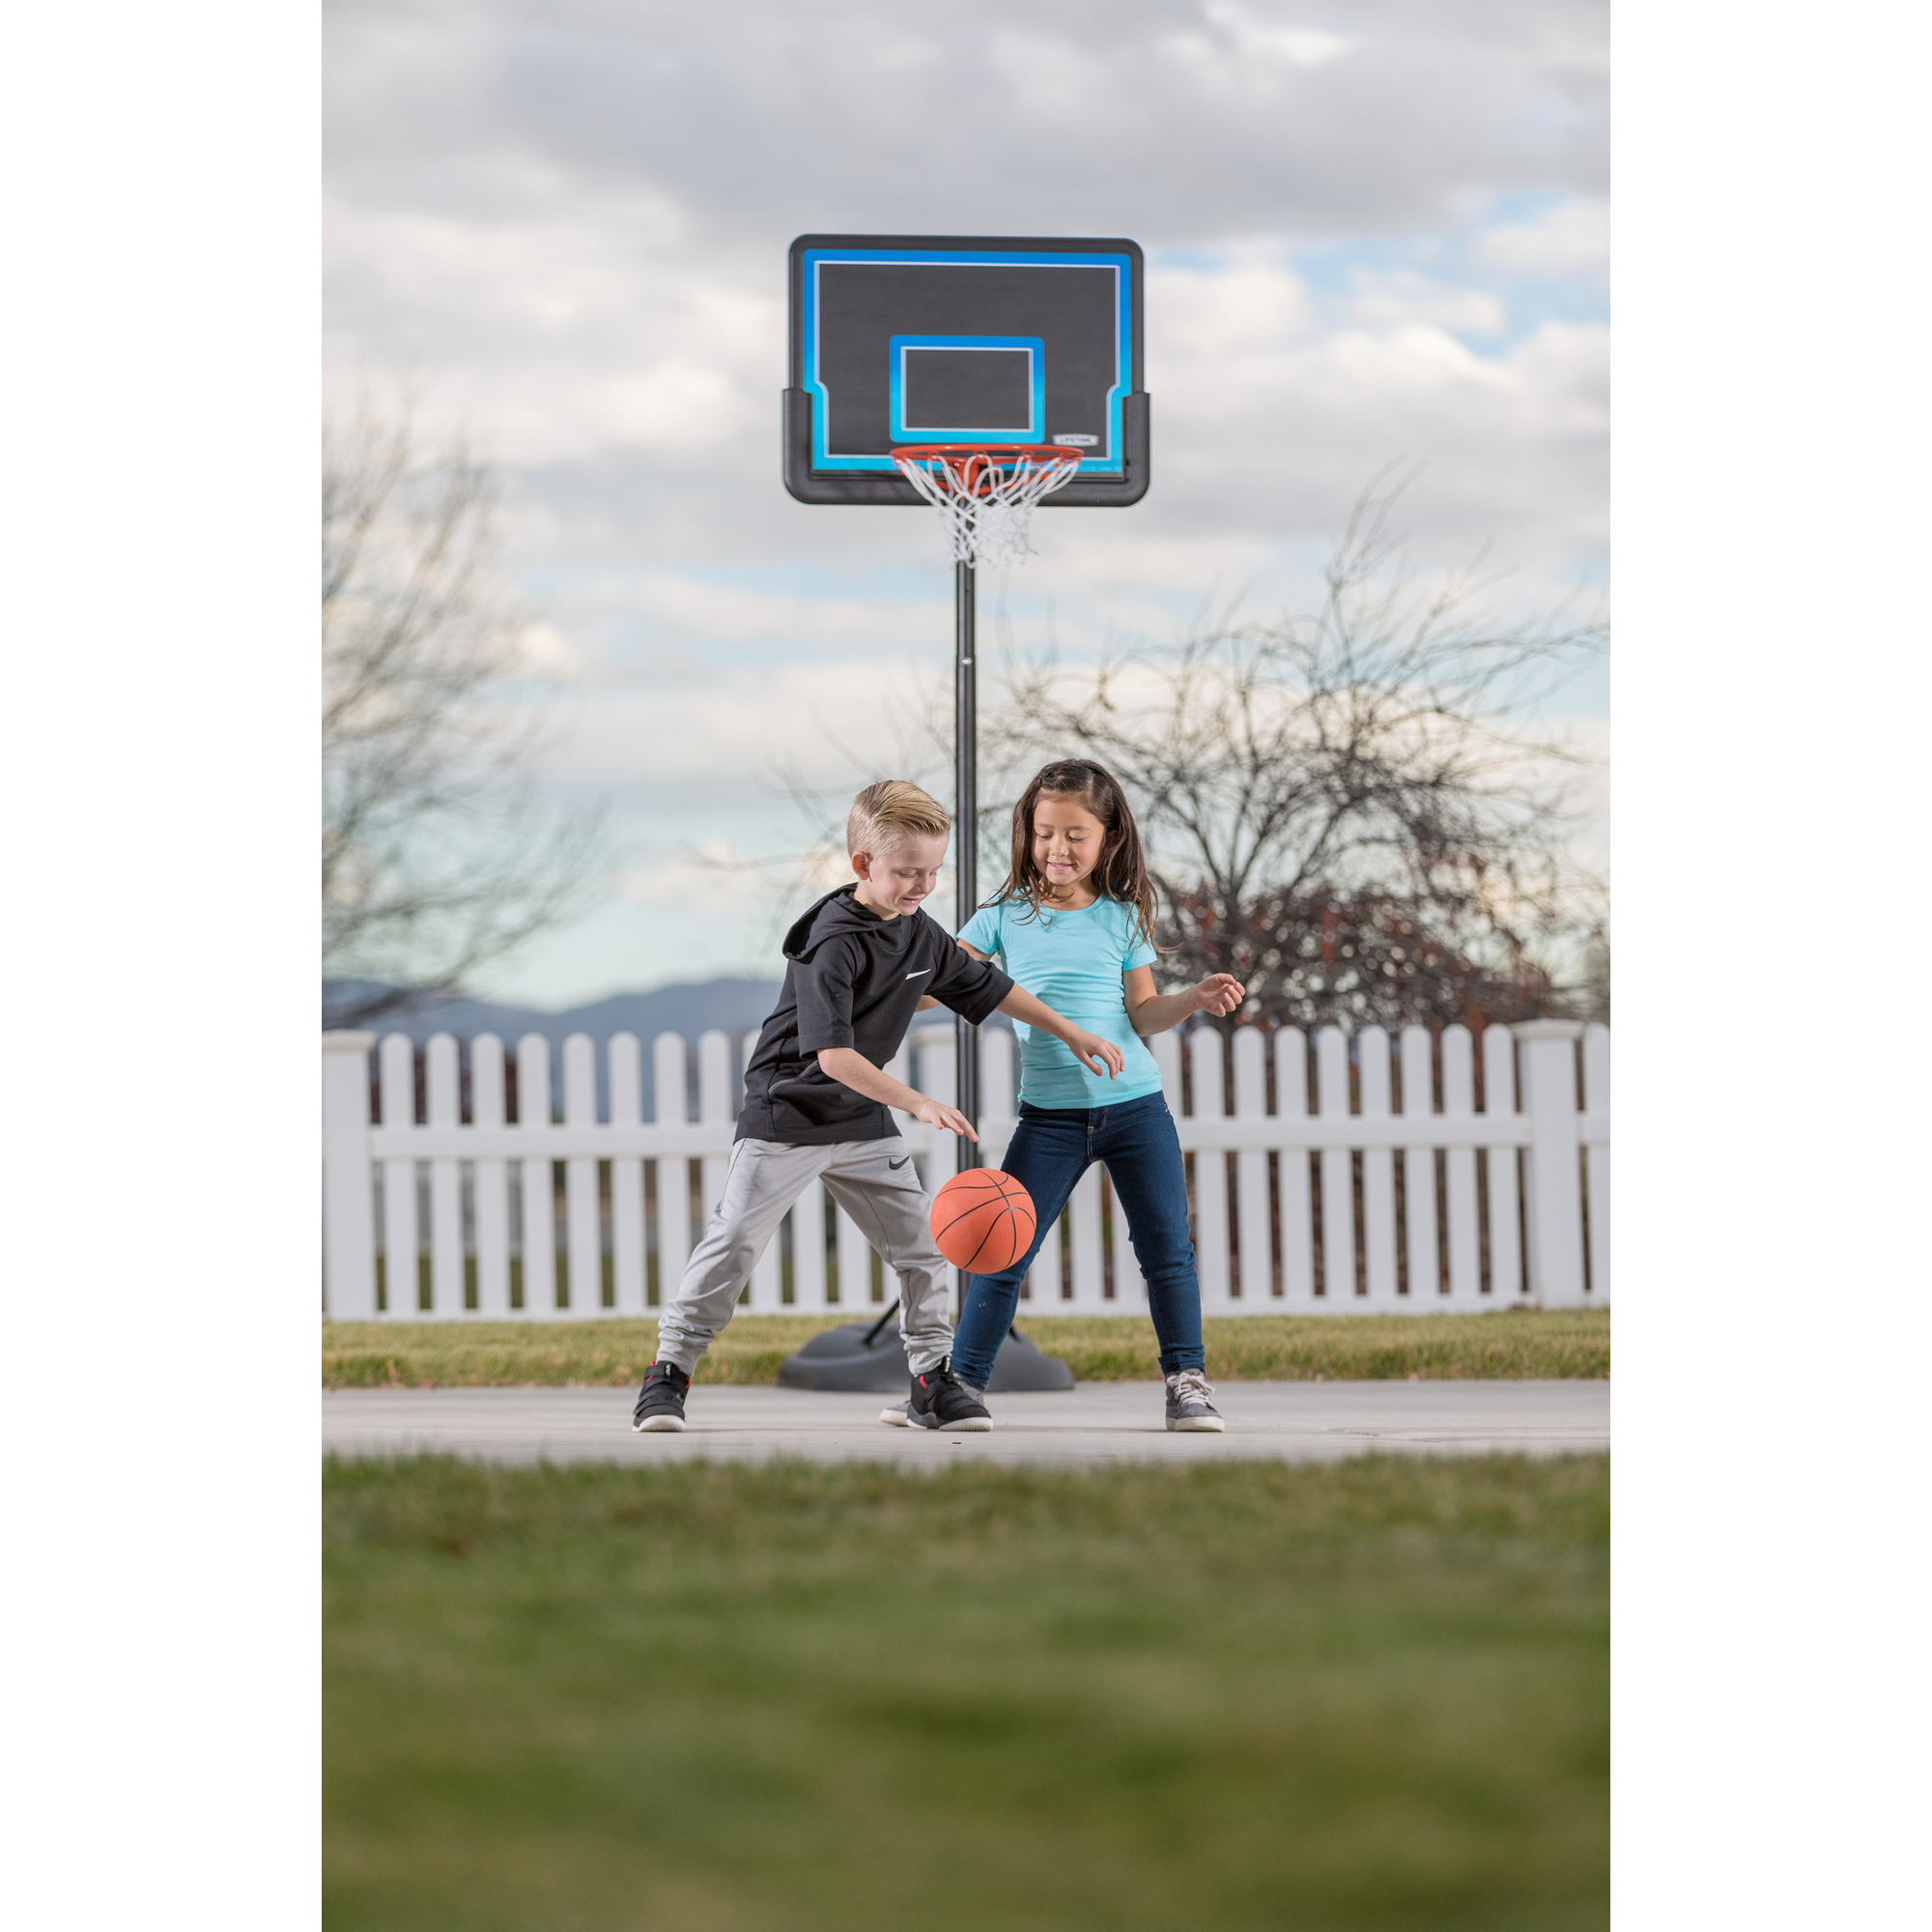 Basketballkorb 'Hawaii' schwarz/blau mit Standfuss 81 x 229 cm + product picture